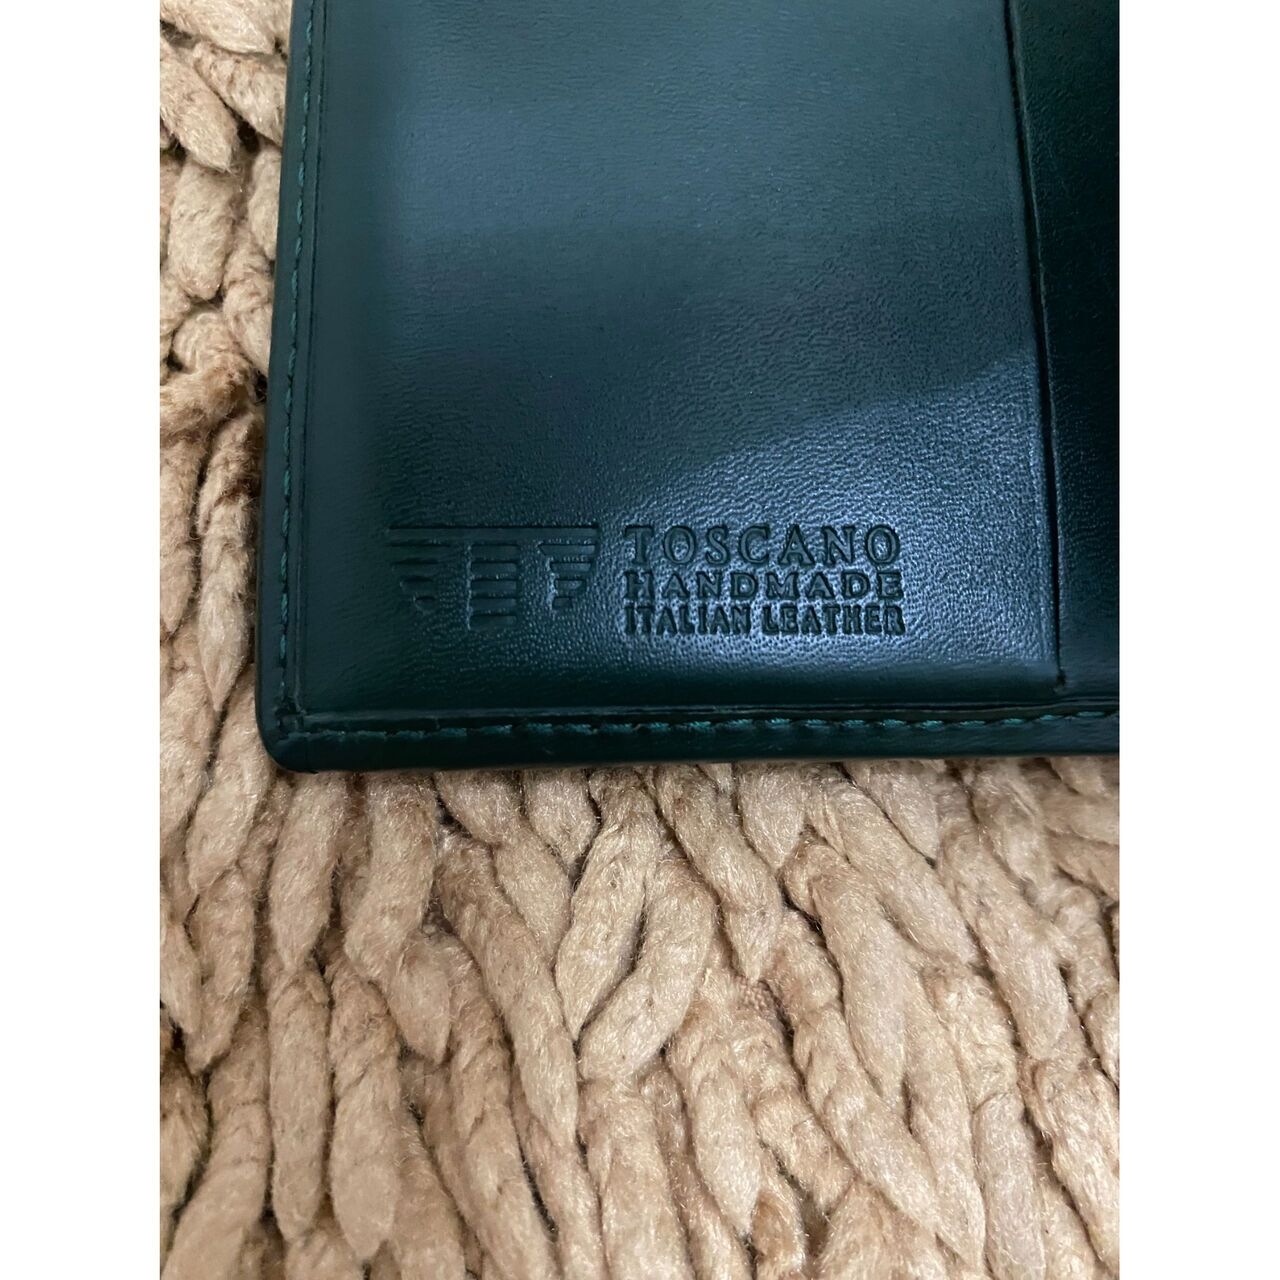 Toscano Green Wallet